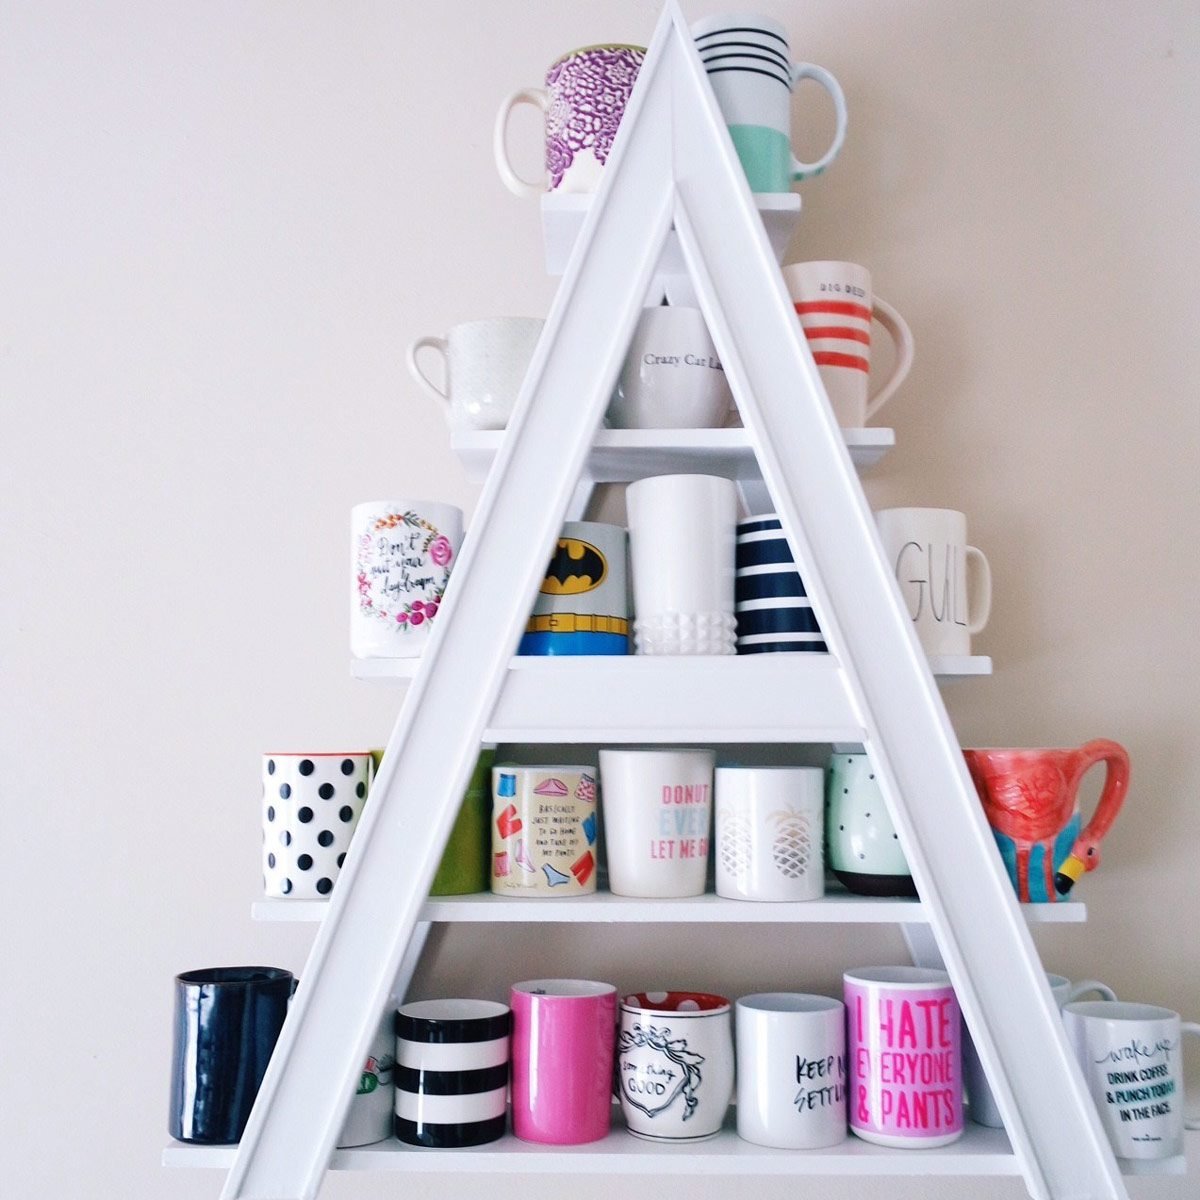 Coffee Mug Holder 3-12 cup Sets, Wall Mounted Mug Hooks